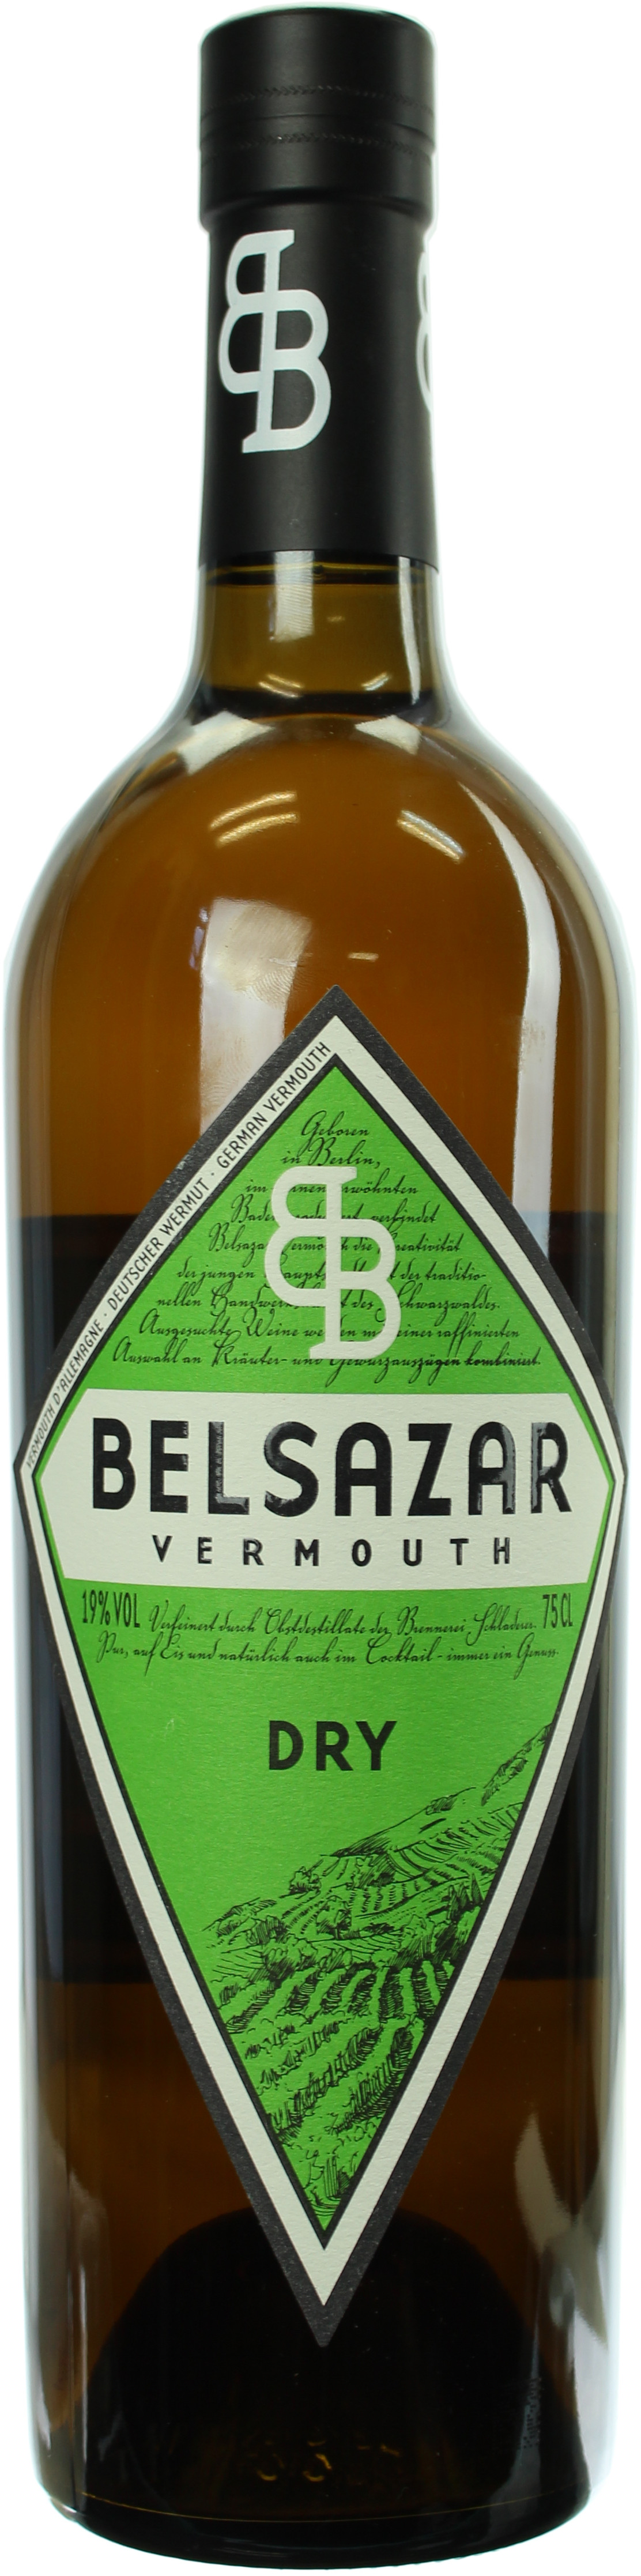 Belsazar Vermouth Dry 19.0% 0,75l